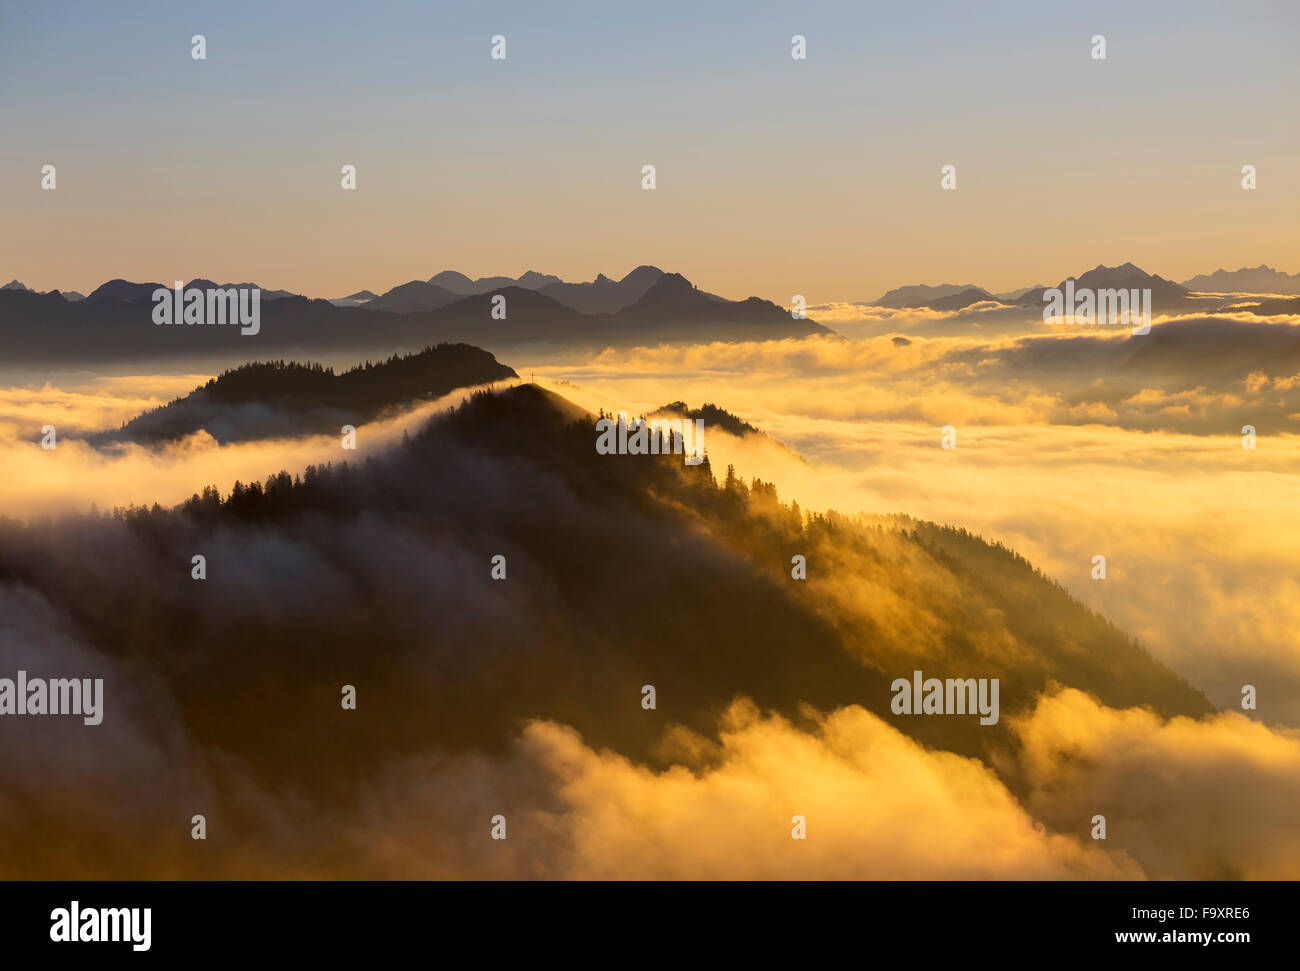 Germany, Bavaria, Bavarian Prealps, Sunset at Jochberg mountain, morning mood Stock Photo